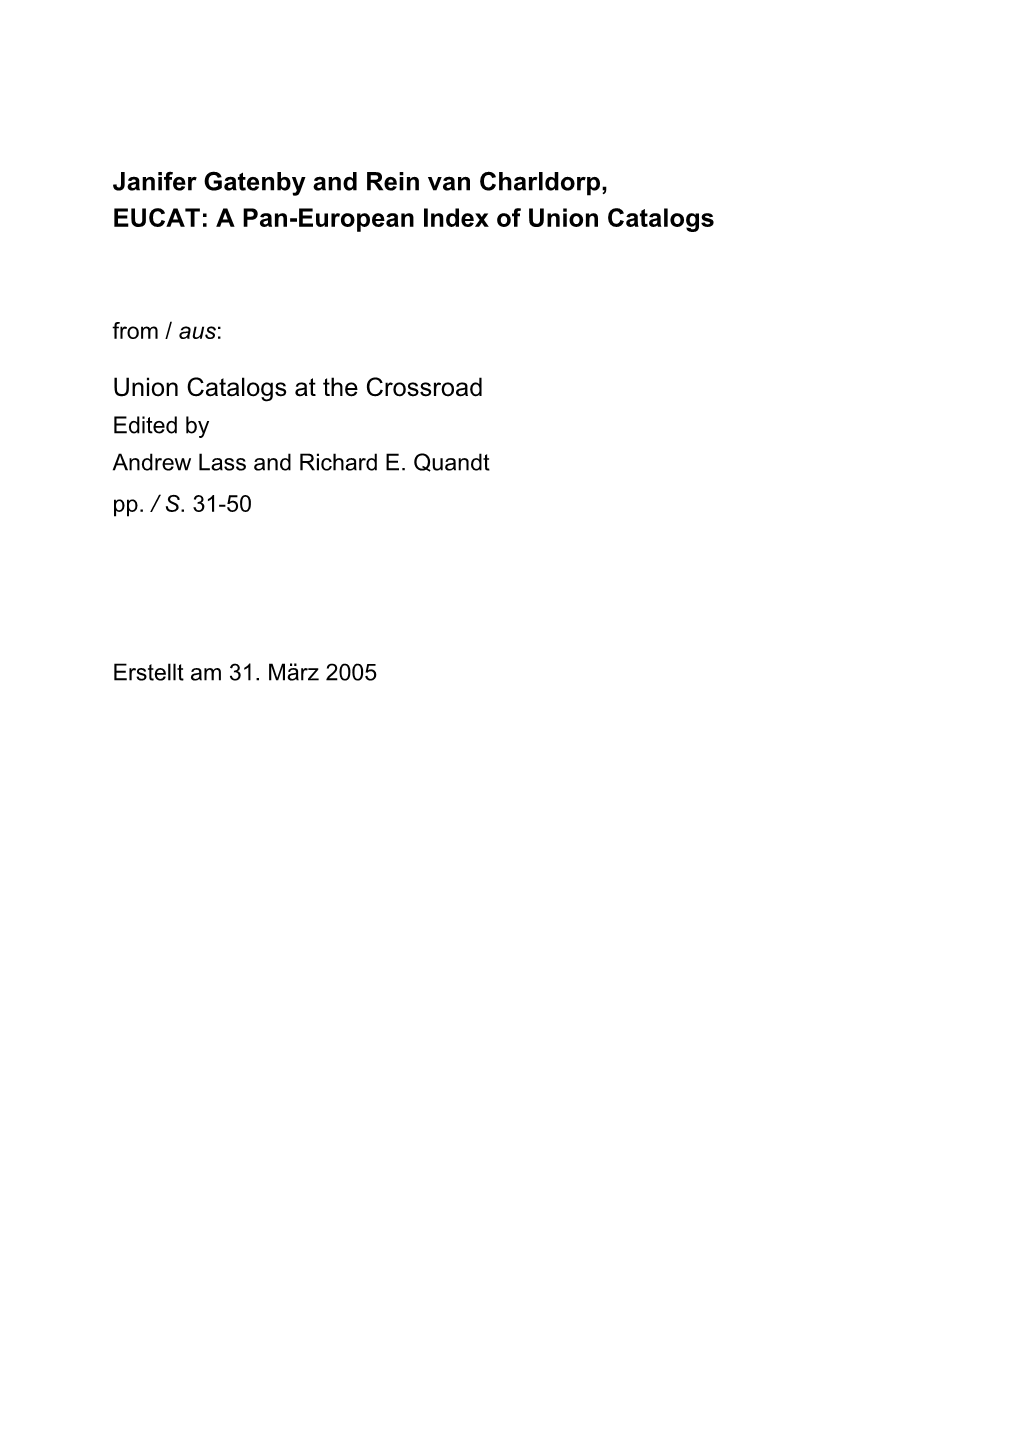 Chapter 1: EUCAT: a Pan-European Index of Union Catalogs